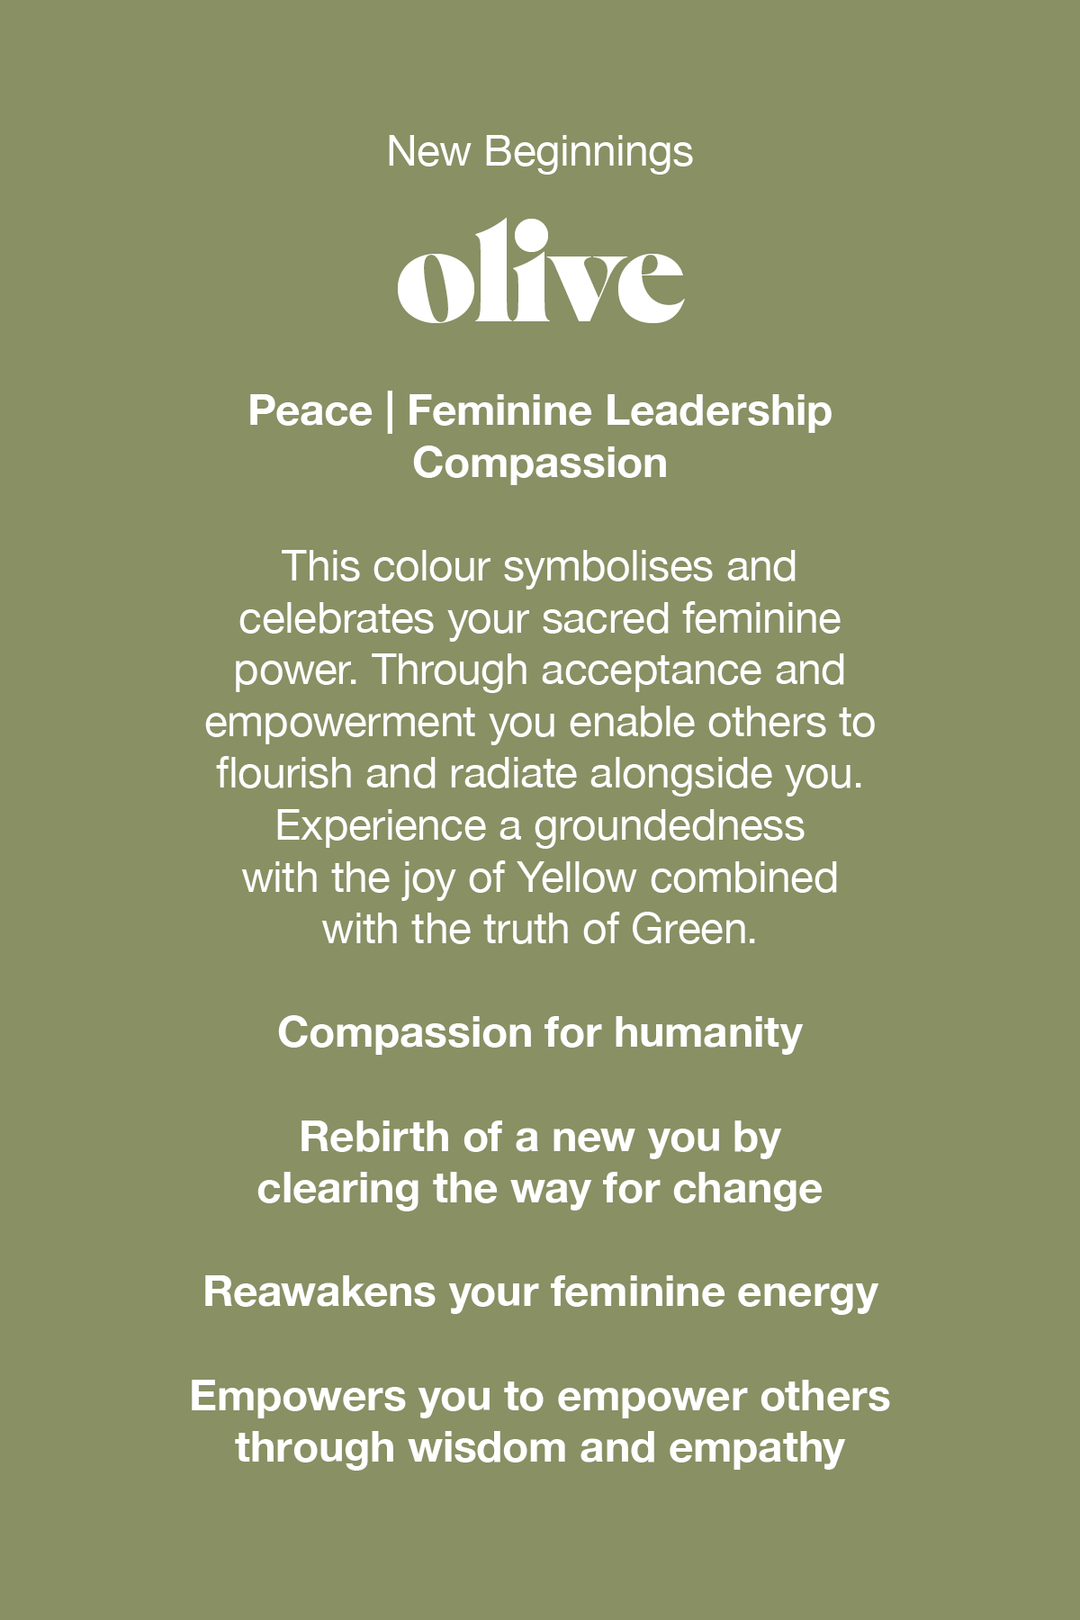 Videris Lingerie Olive colour represents New Beginnings, Peace, Compassion, Sacred Feminine power